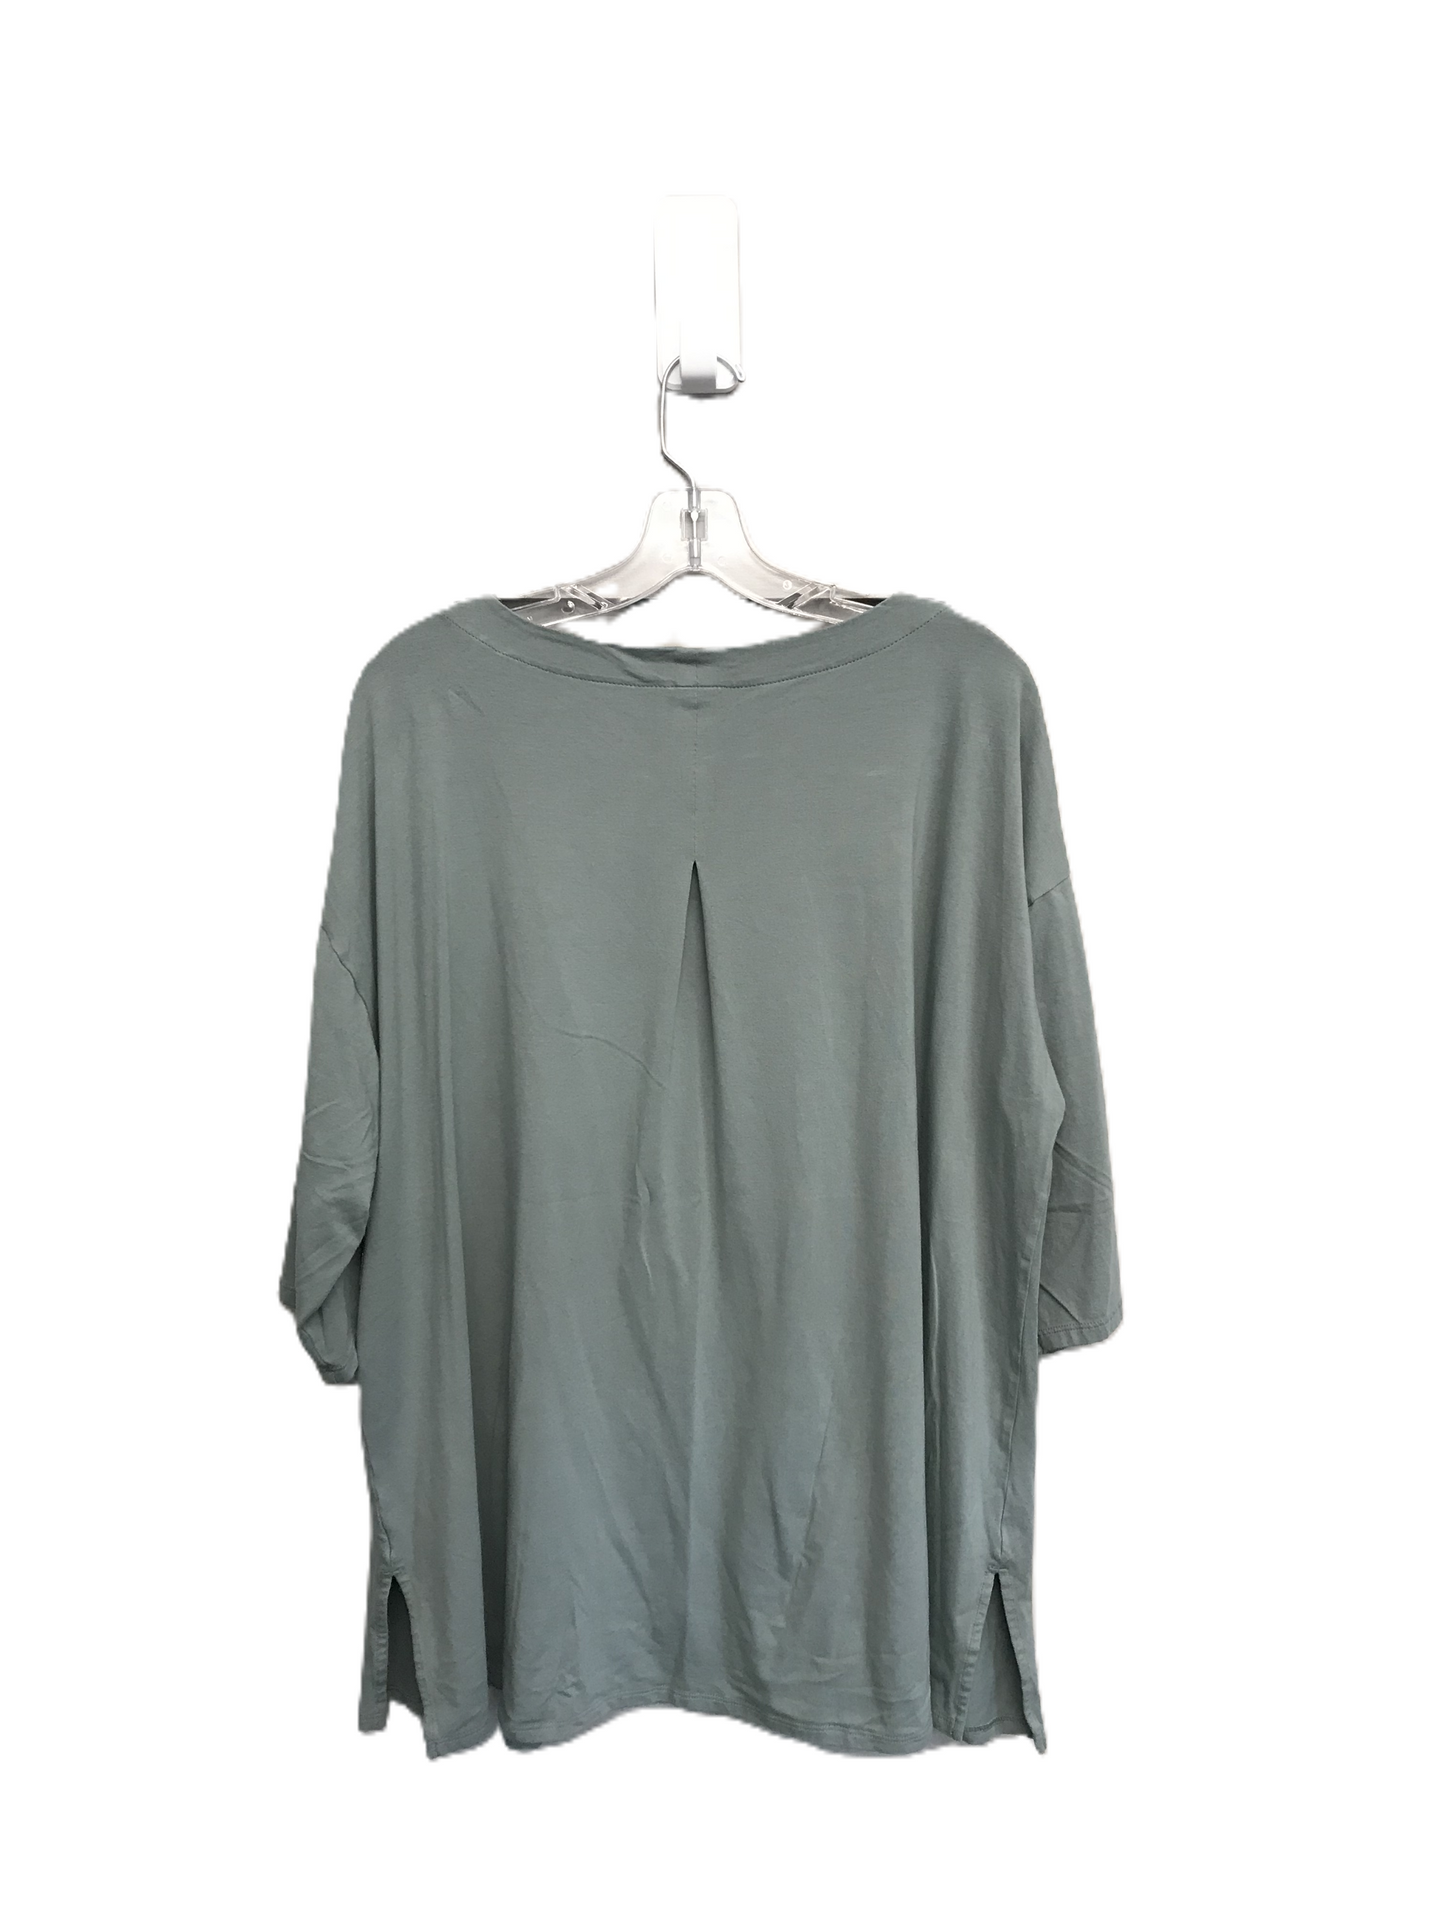 Green Top Short Sleeve Basic By J. Jill, Size: 2x